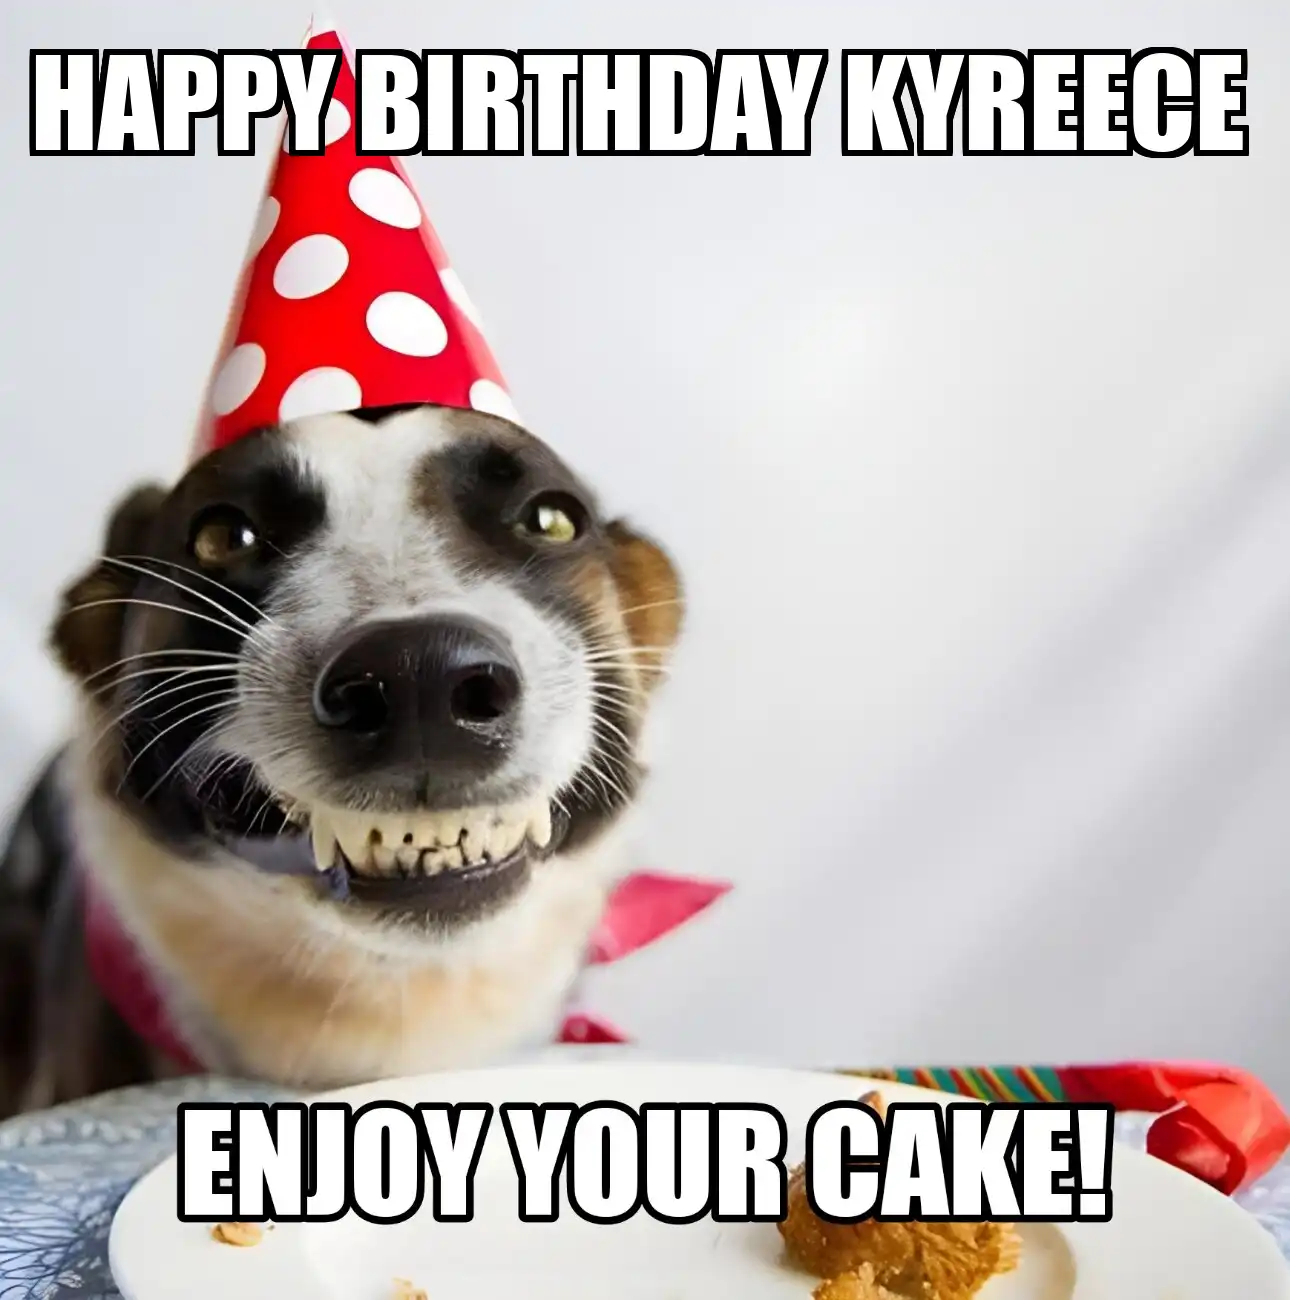 Happy Birthday Kyreece Enjoy Your Cake Dog Meme